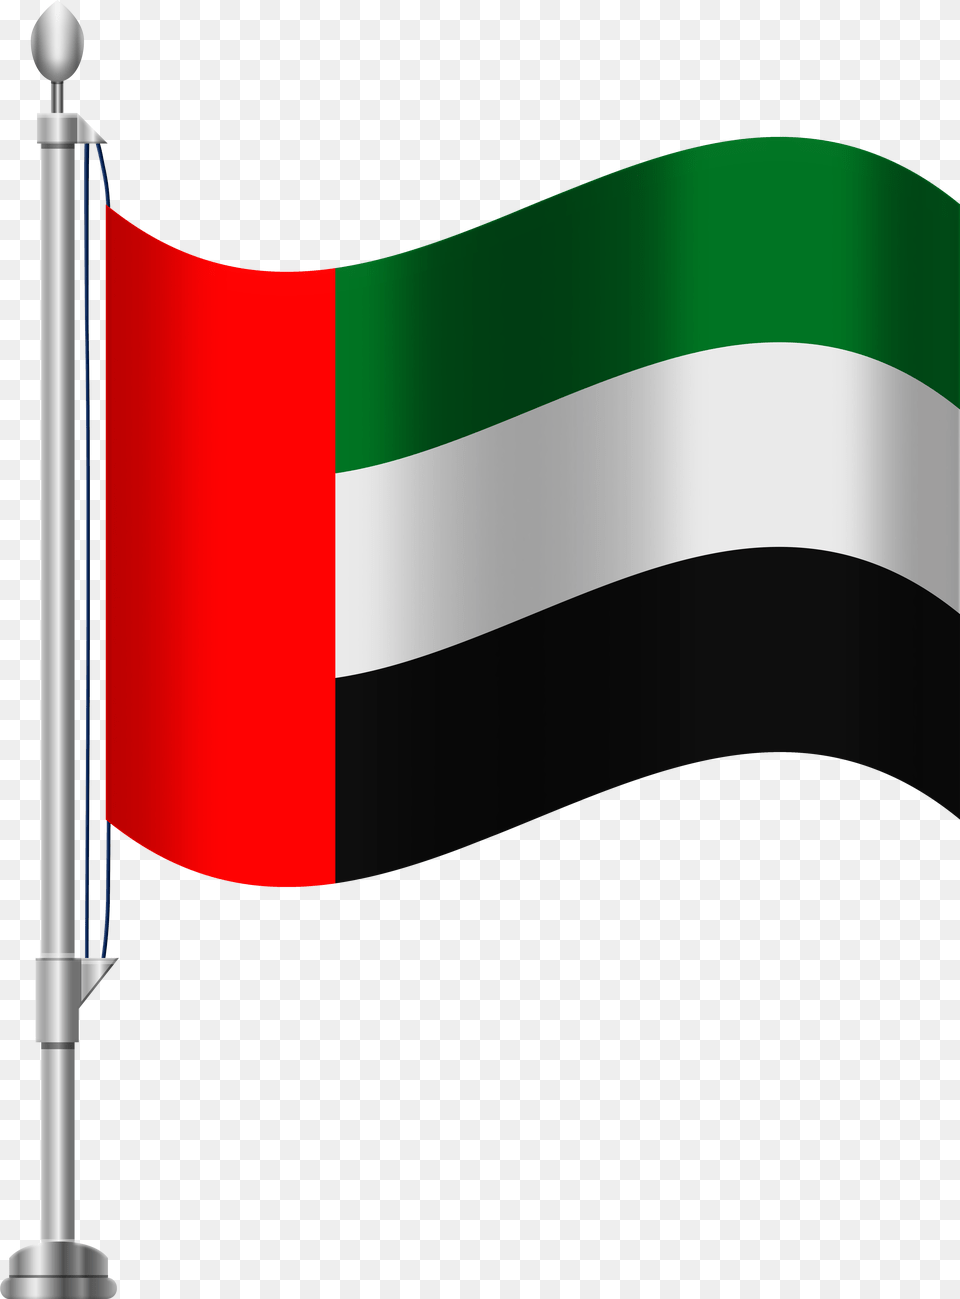 United Arab Emirates Flag Clip Art, United Arab Emirates Flag Png